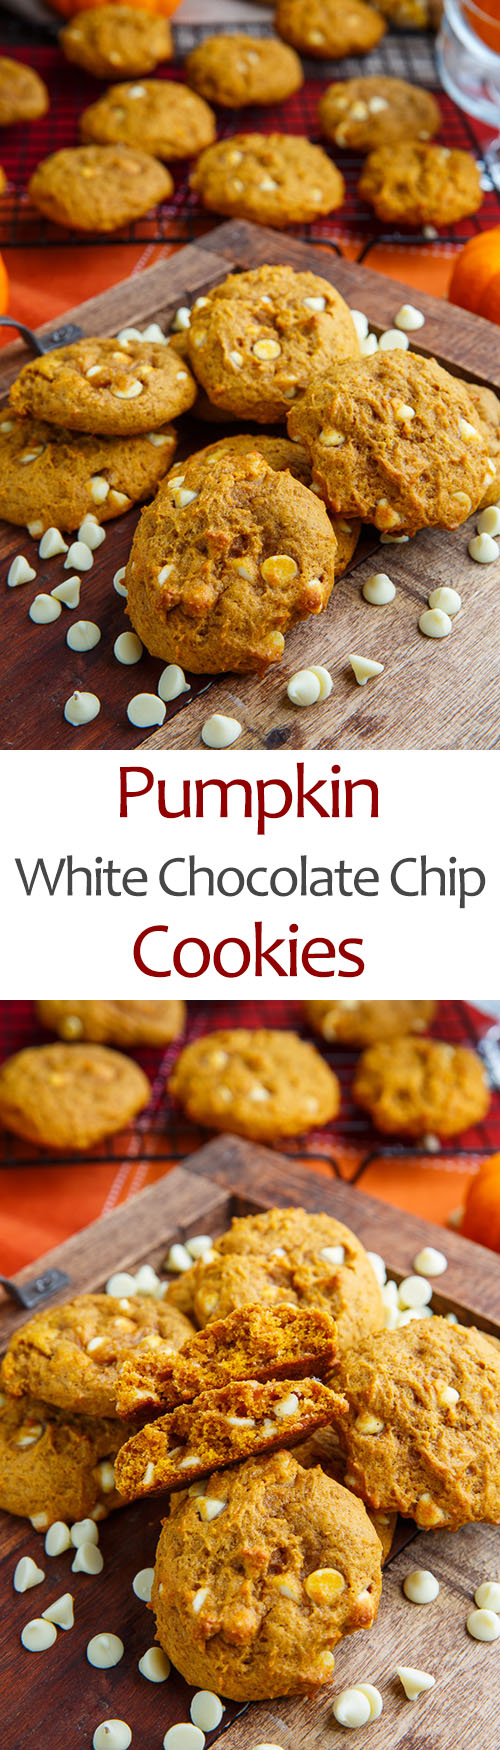 Pumpkin White Chocolate Chip Cookies